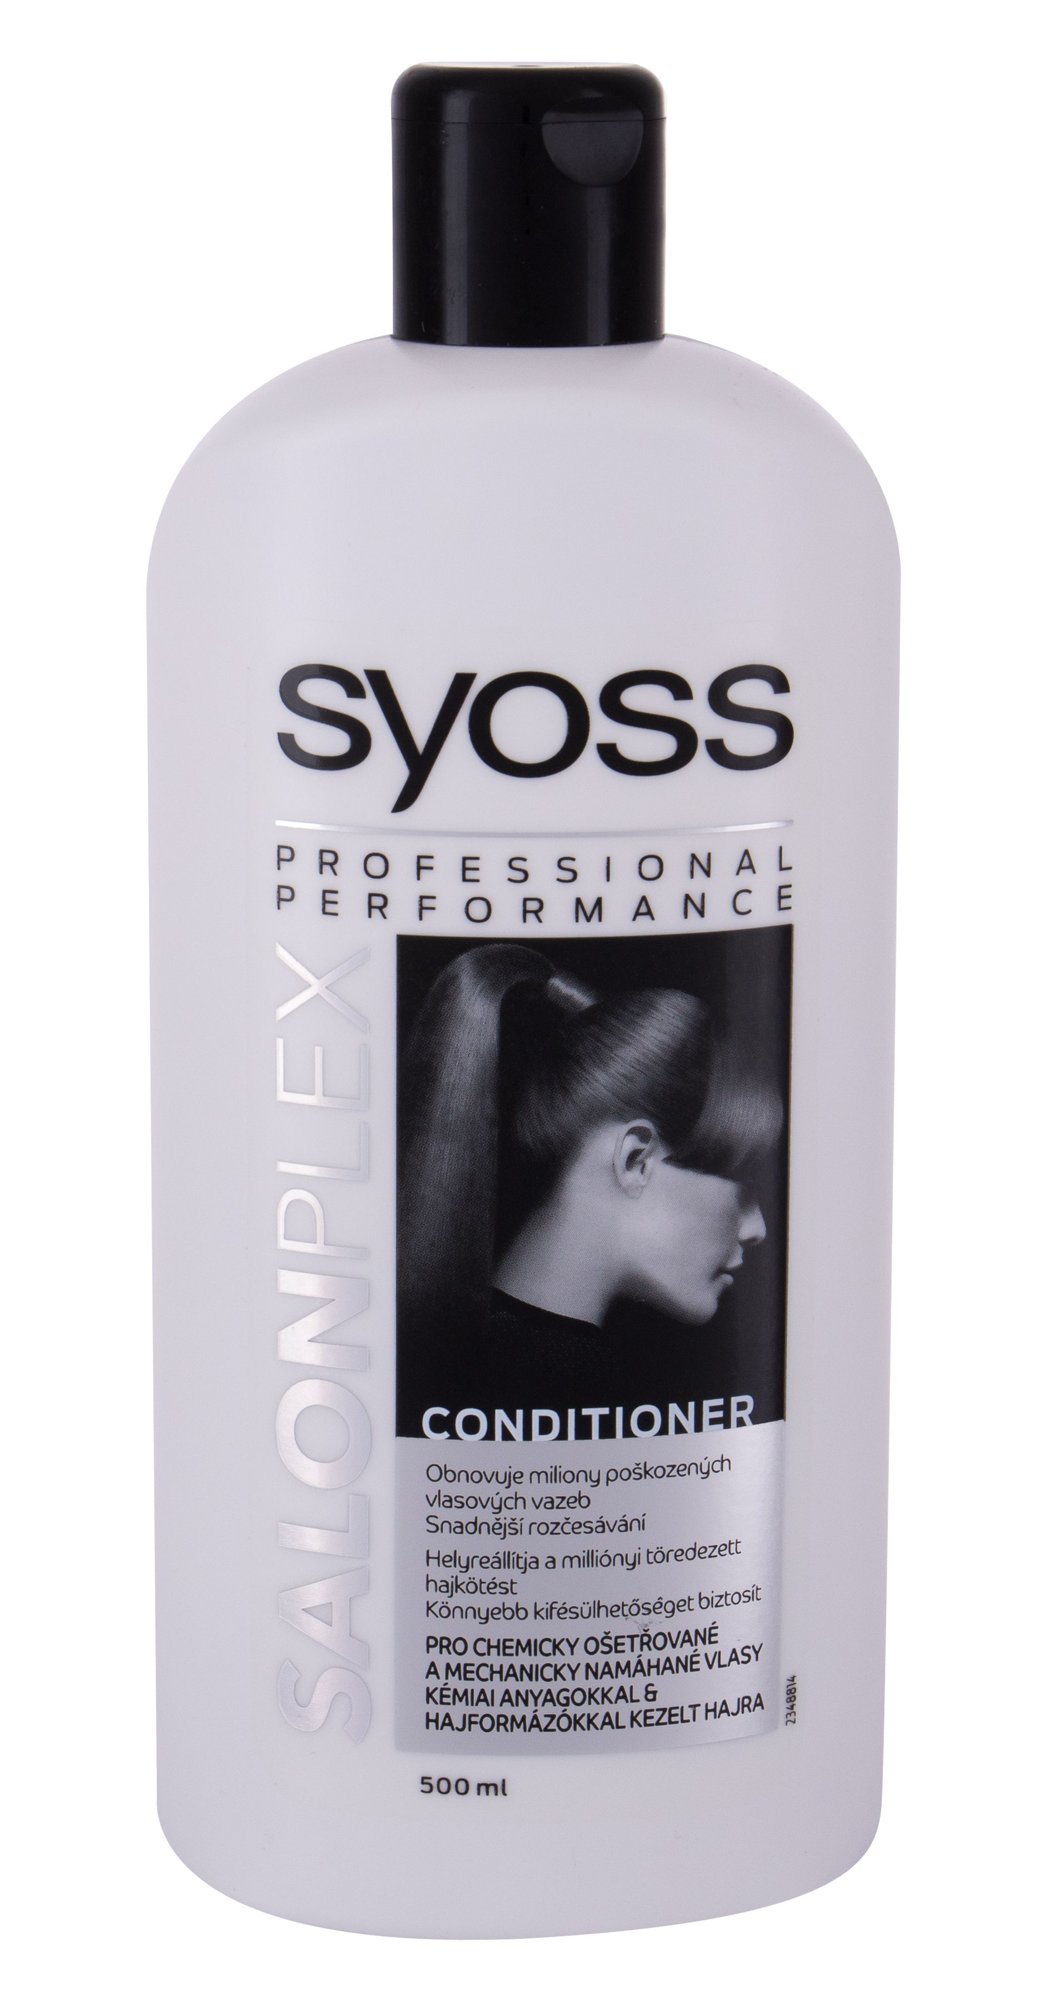 Syoss Professional Performance SalonPlex 500ml kondicionierius